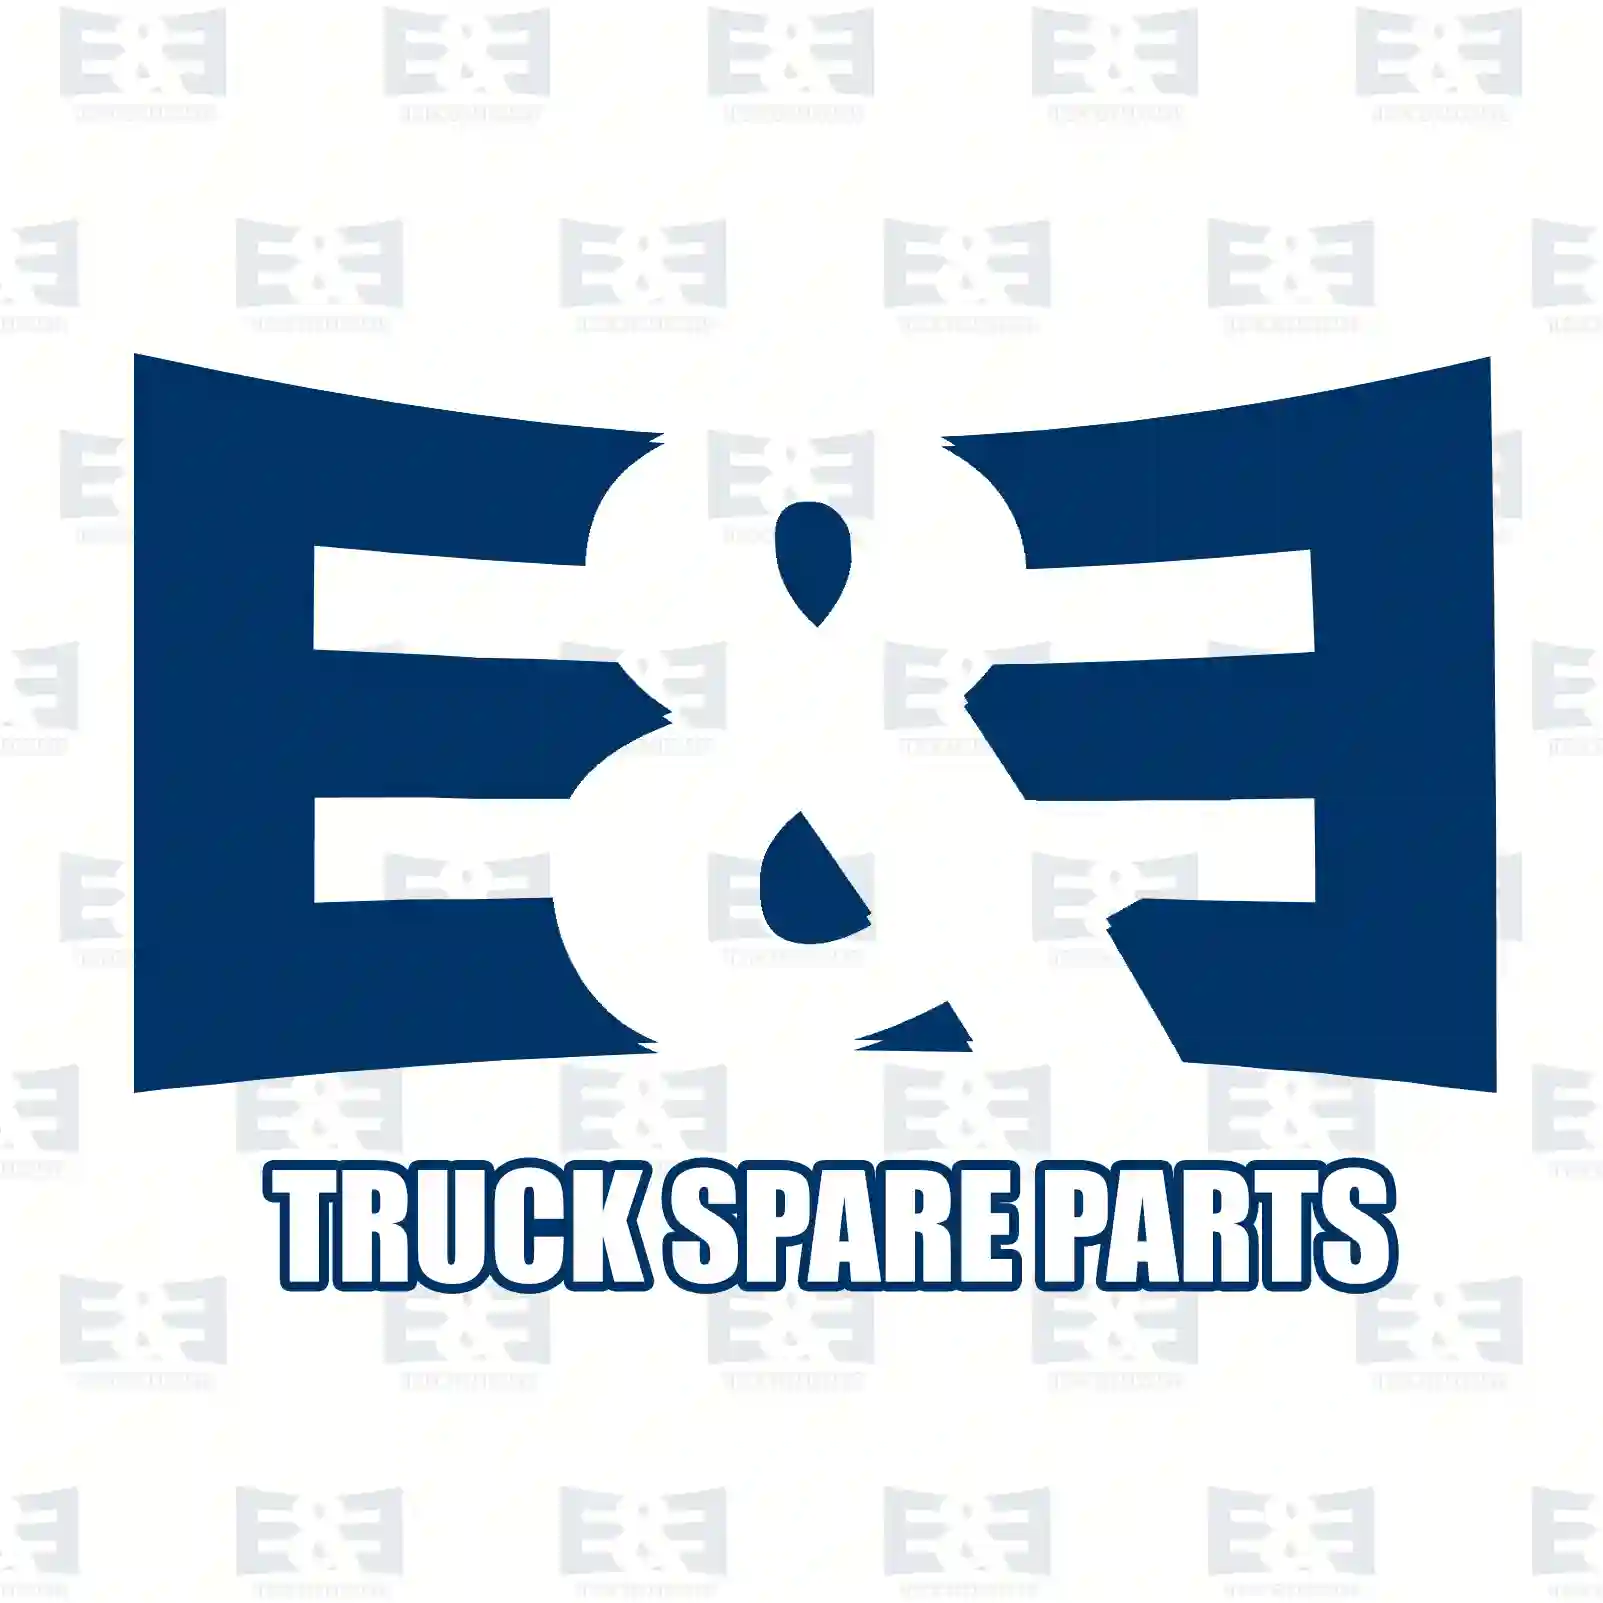 Clutch cylinder, 2E2288417, 55196181, 55235402, 71736191 ||  2E2288417 E&E Truck Spare Parts | Truck Spare Parts, Auotomotive Spare Parts Clutch cylinder, 2E2288417, 55196181, 55235402, 71736191 ||  2E2288417 E&E Truck Spare Parts | Truck Spare Parts, Auotomotive Spare Parts